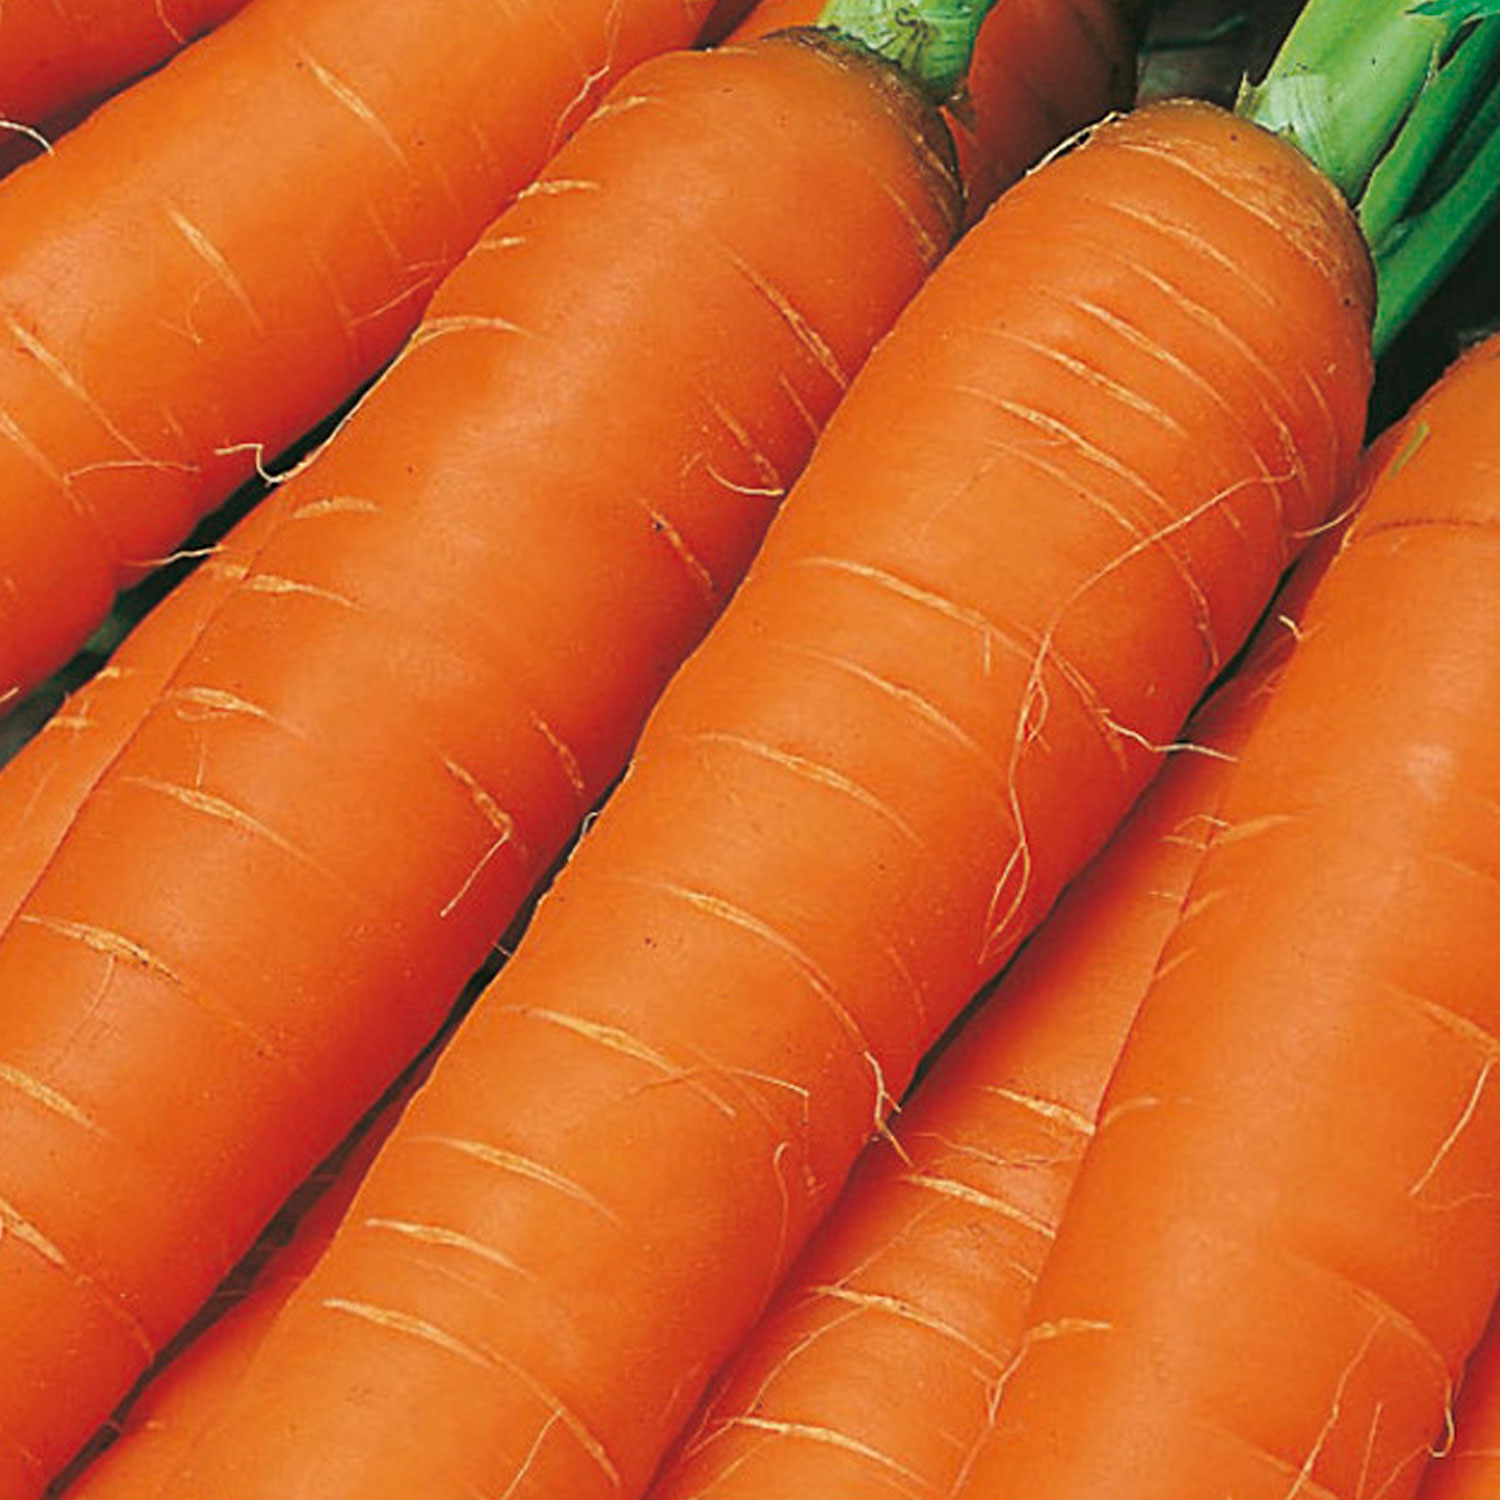 Johnsons Jitka F1 Carrot Seeds Image 1